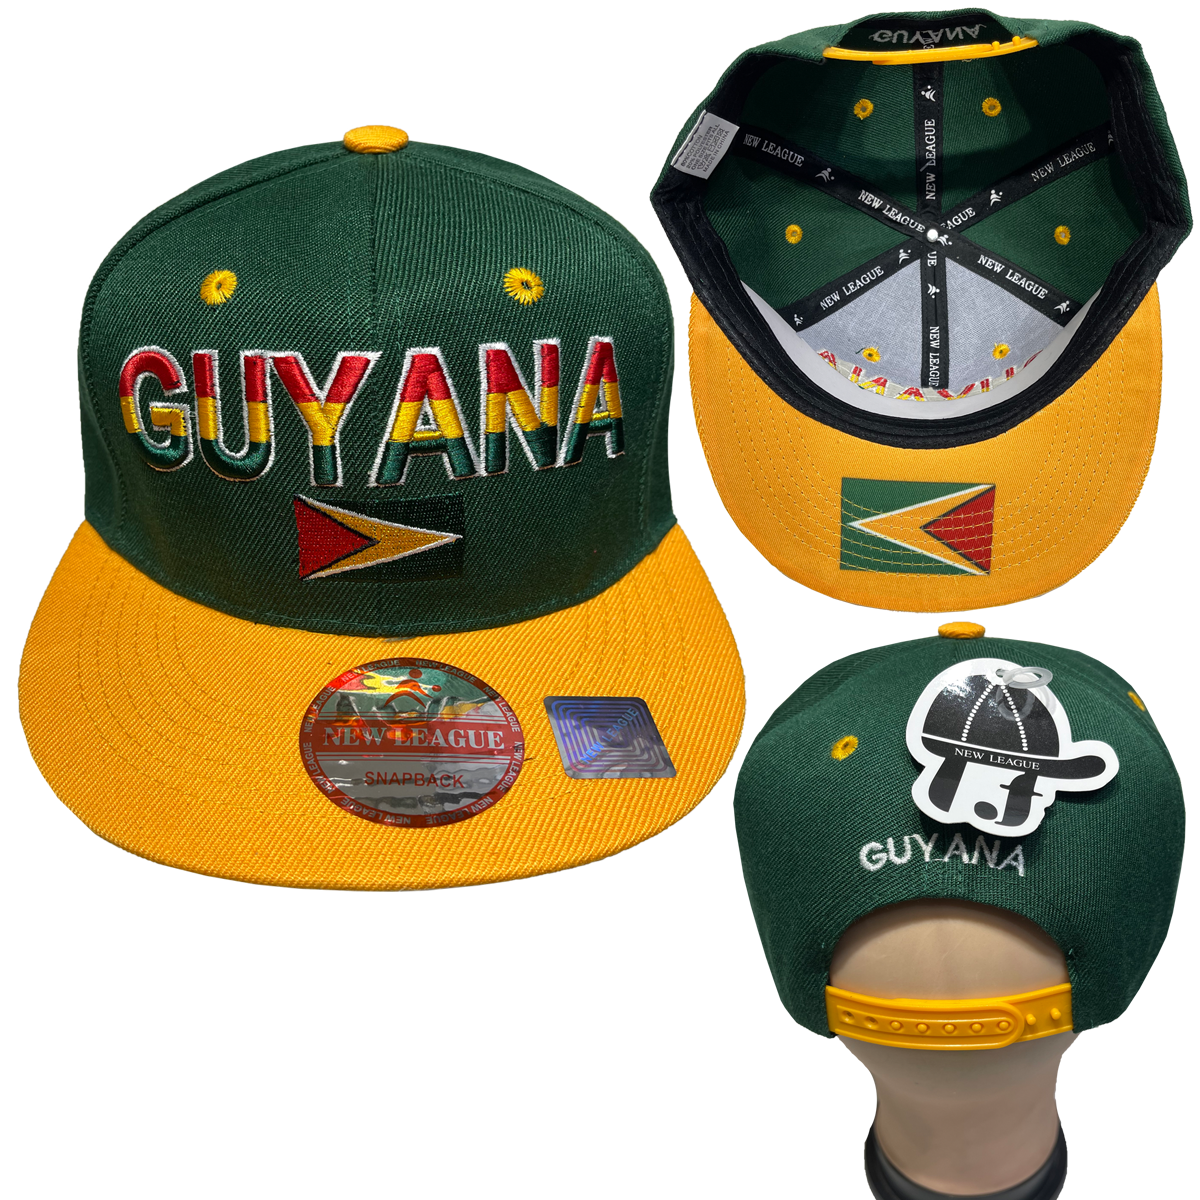 Guyana Flag Embroidered Snapback Flat Brim Adjustable Baseball Hats/Caps.